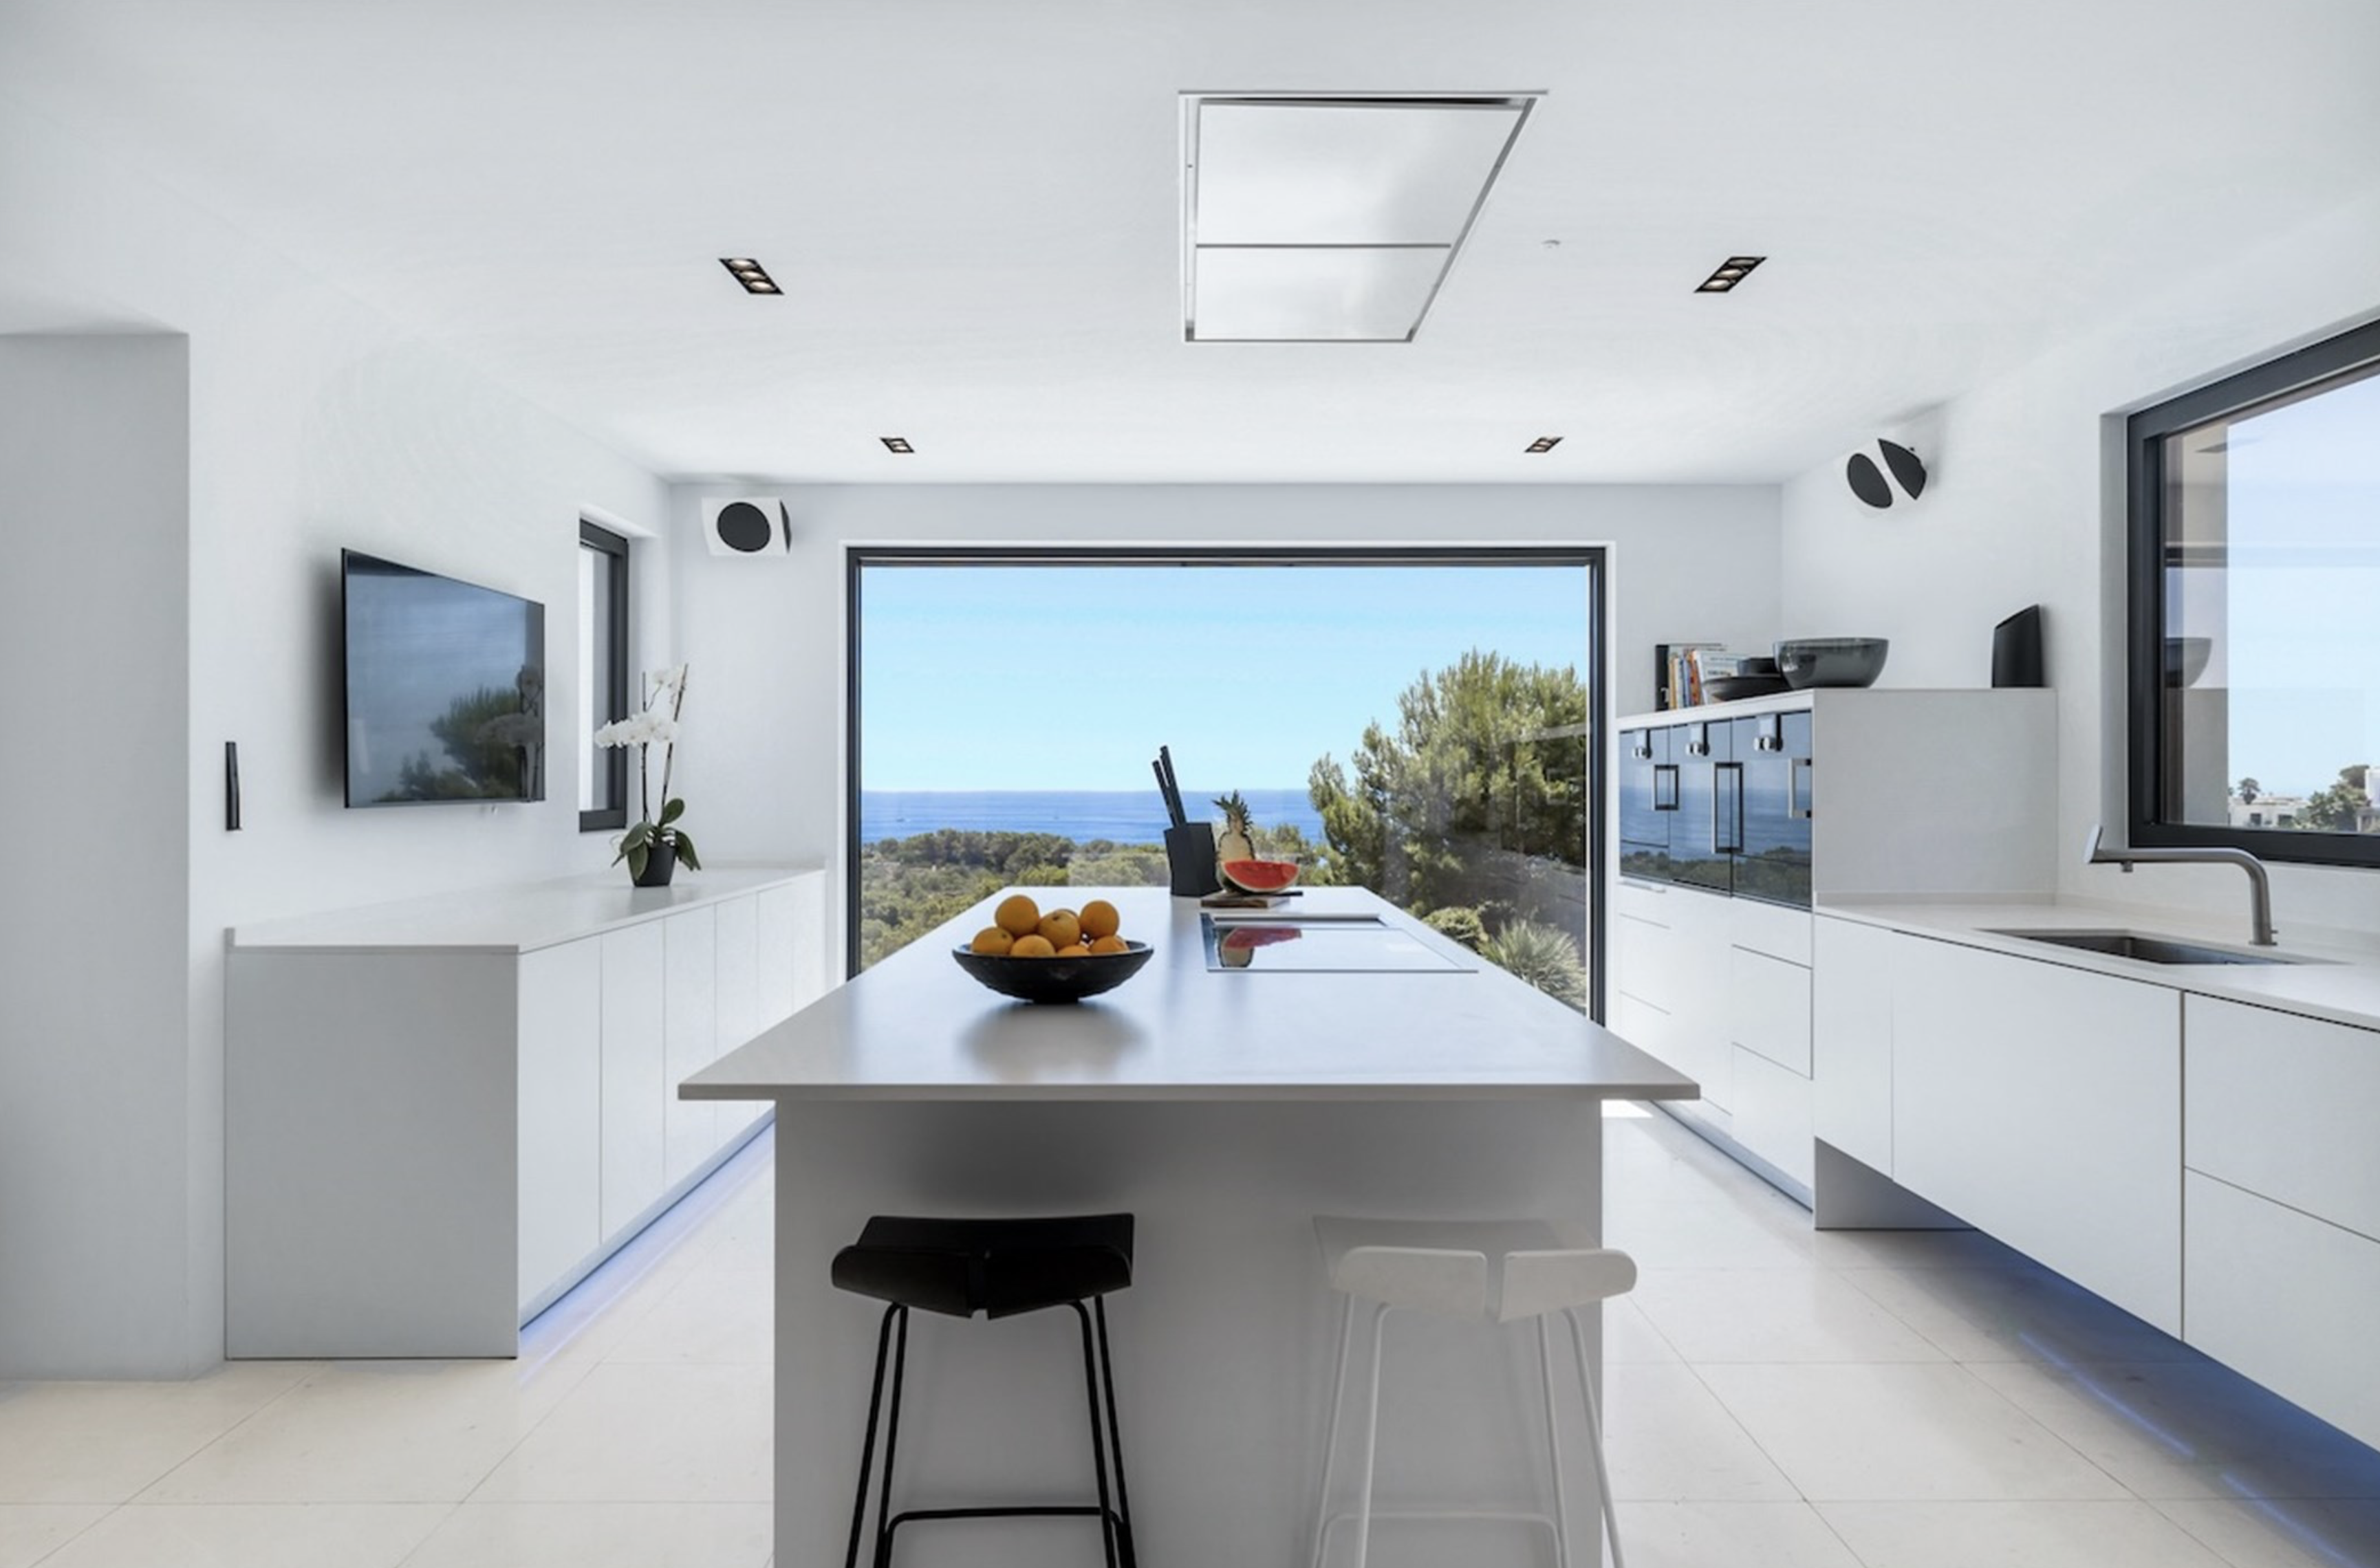 Resa Estates can nemo luxury villa Pep simo kitchen.png